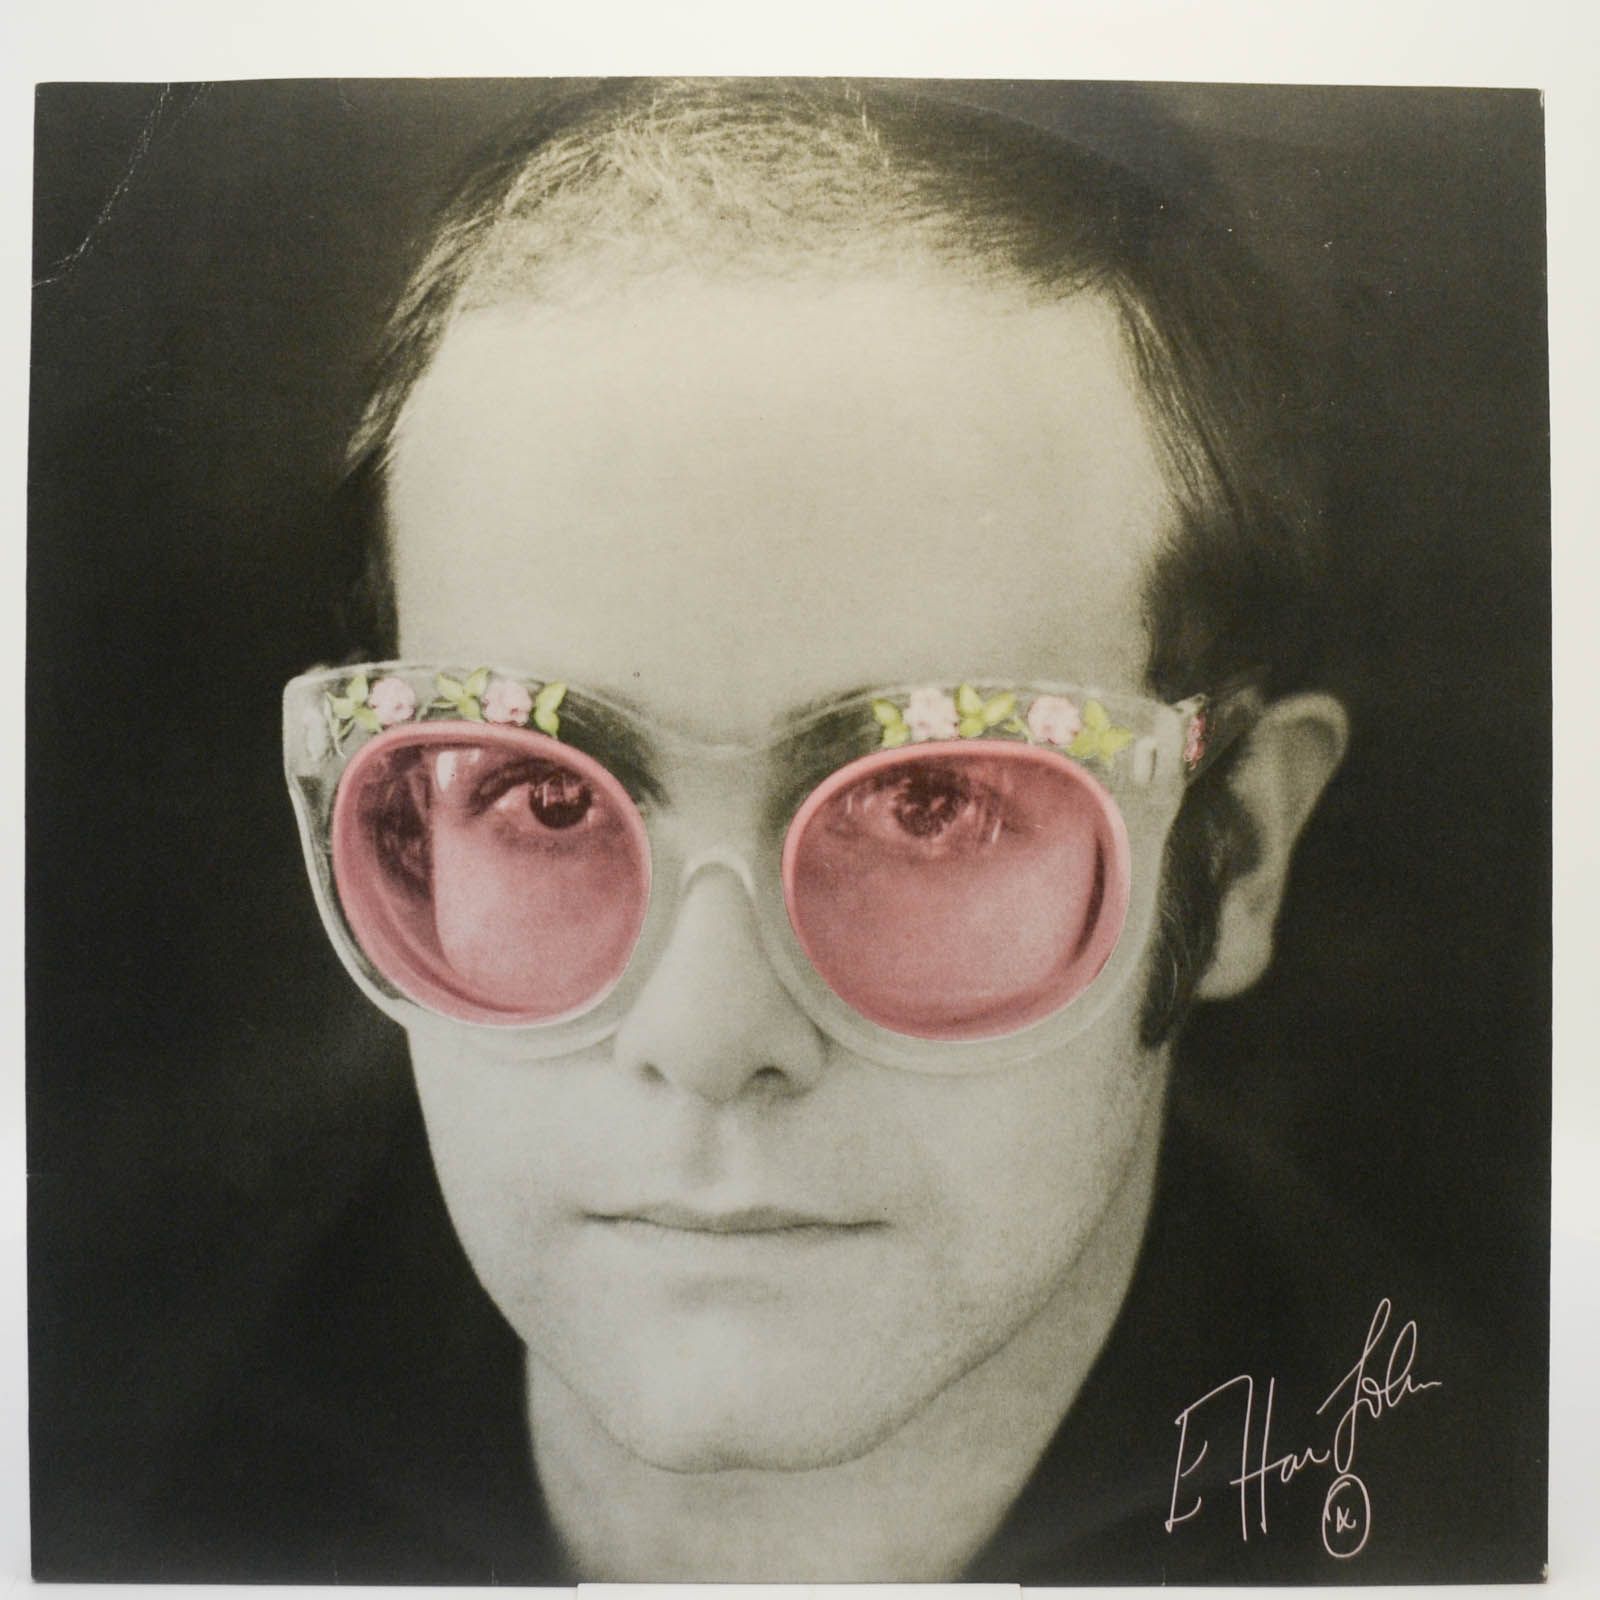 Elton John — Caribou, 1974